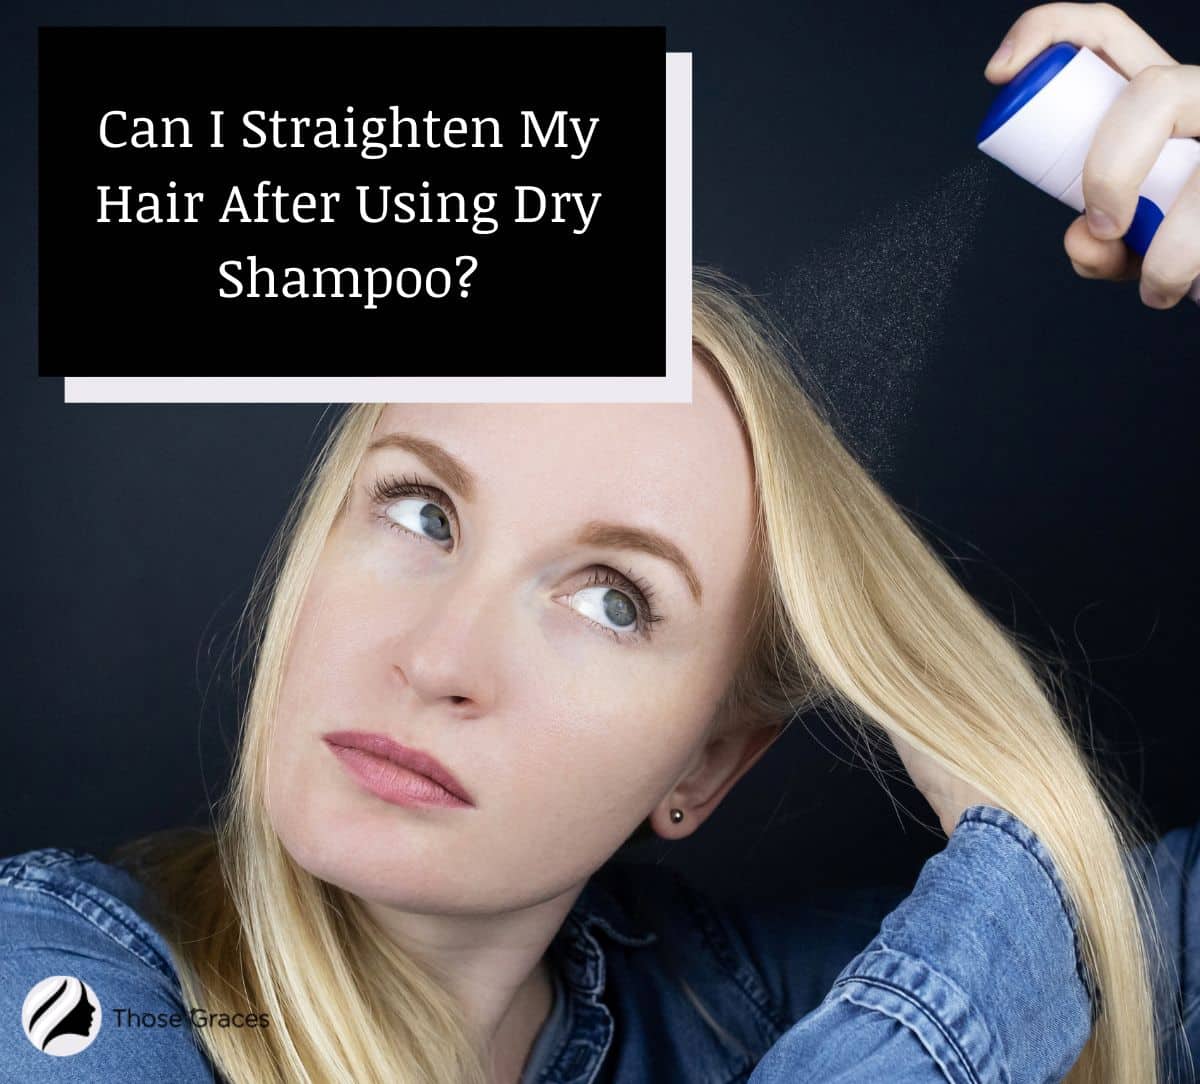 lady spraying dry shampoo and wondering 